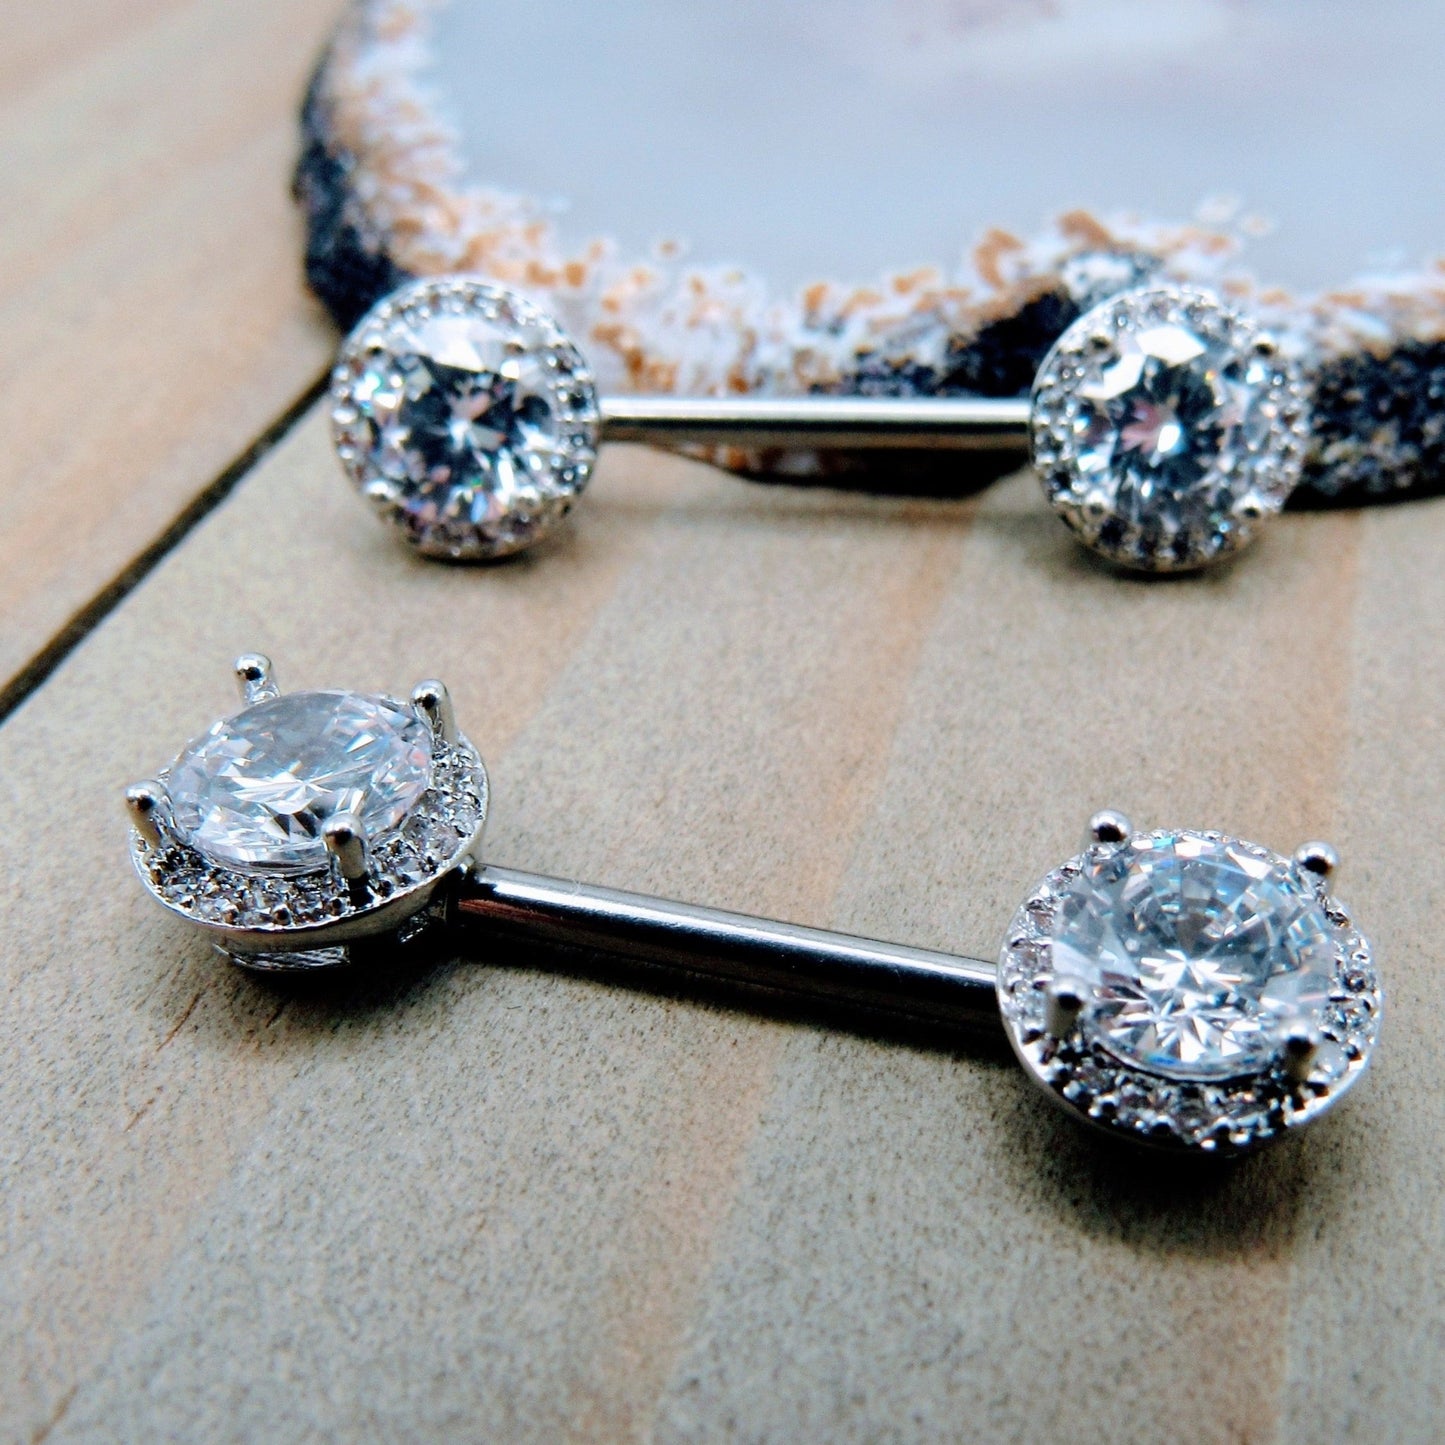 14g Round CZ gemstone paved gems nipple piercing barbell set 9/16" length pair silver surgical steel - Siren Body Jewelry